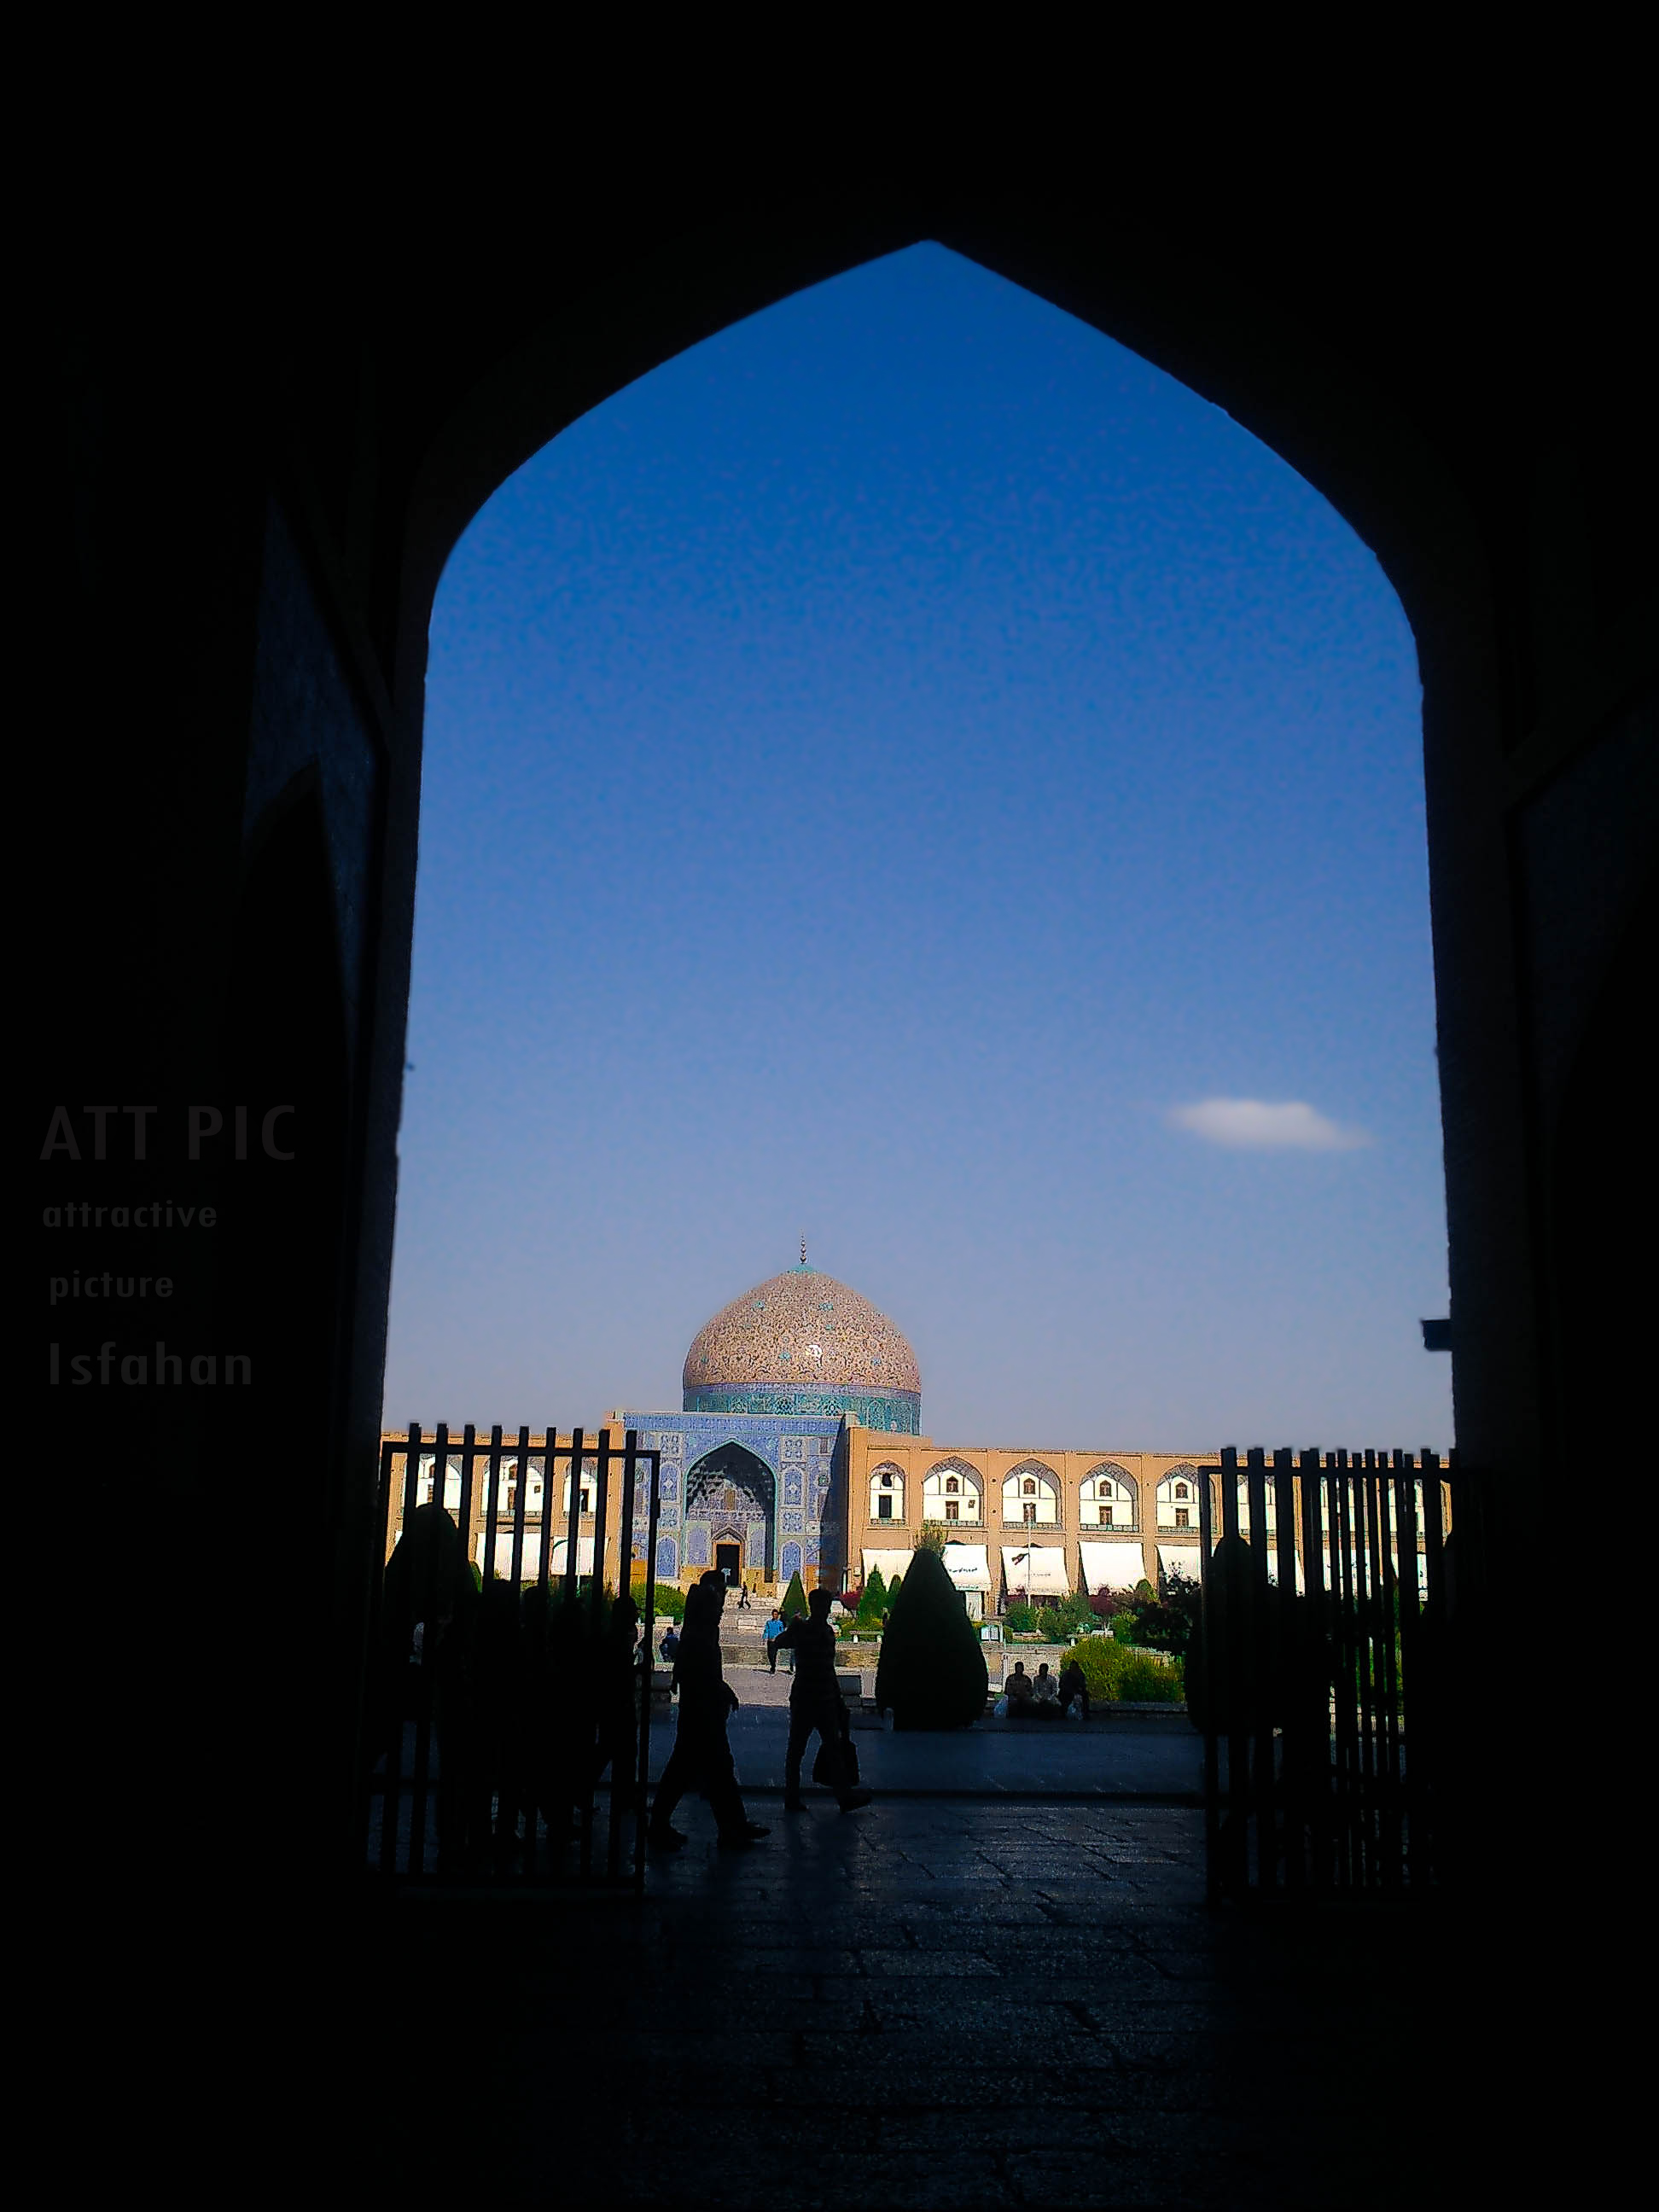 ATT PIC_Isfahan